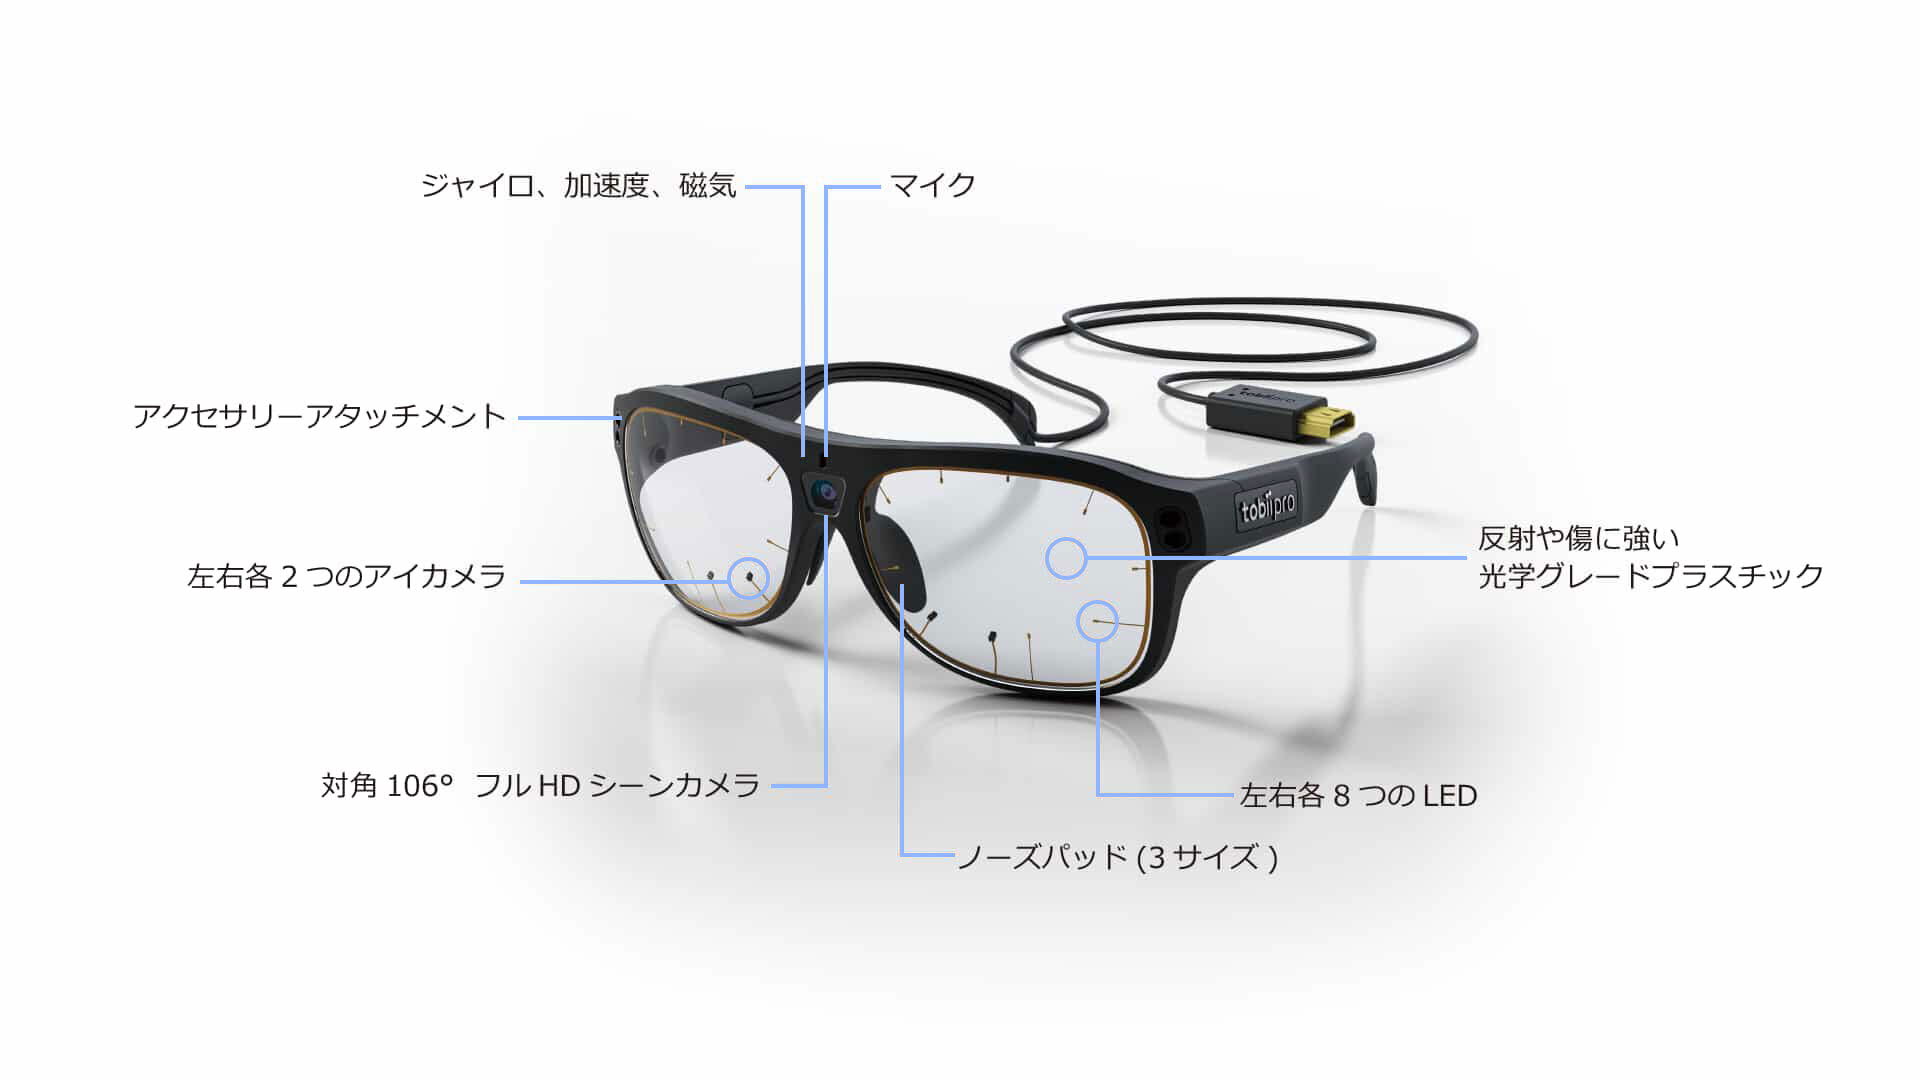 Tobii Pro Glasses 3 components Japanese